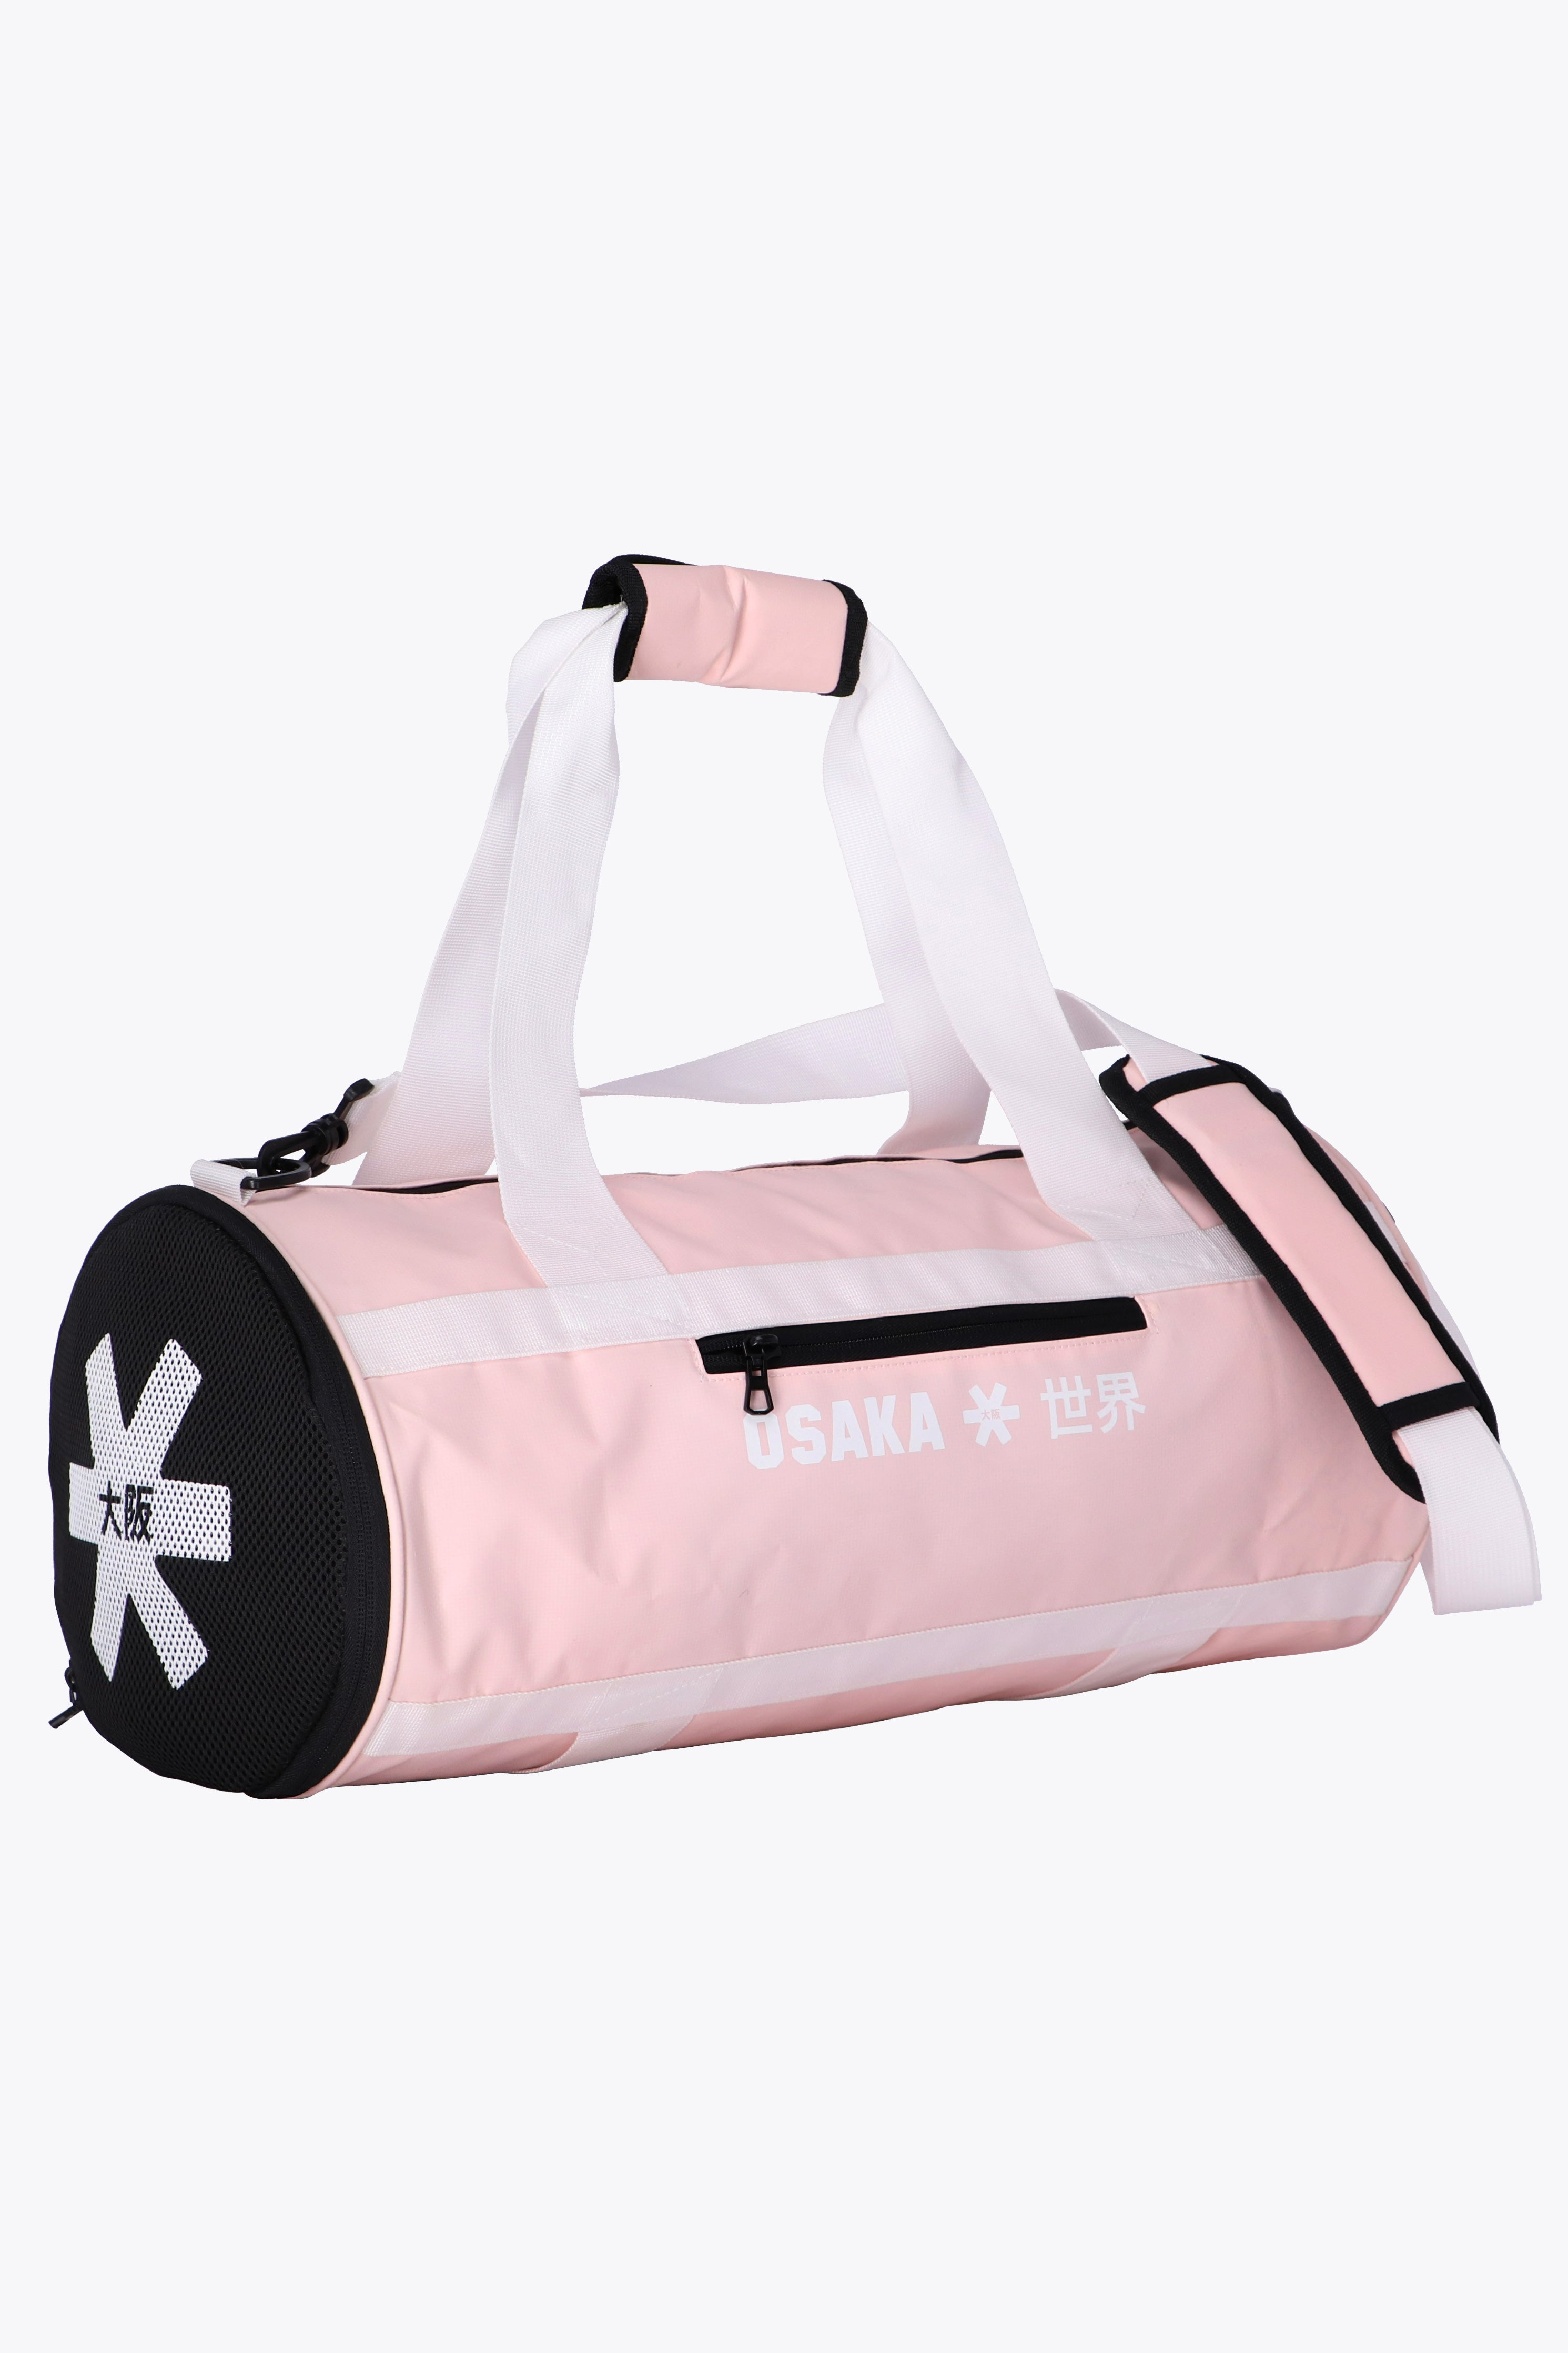 HawLander Cute Dance Bag for Little Girls, Kids Duffel Bag for Ballet, Small  Size – HawLander Backpack